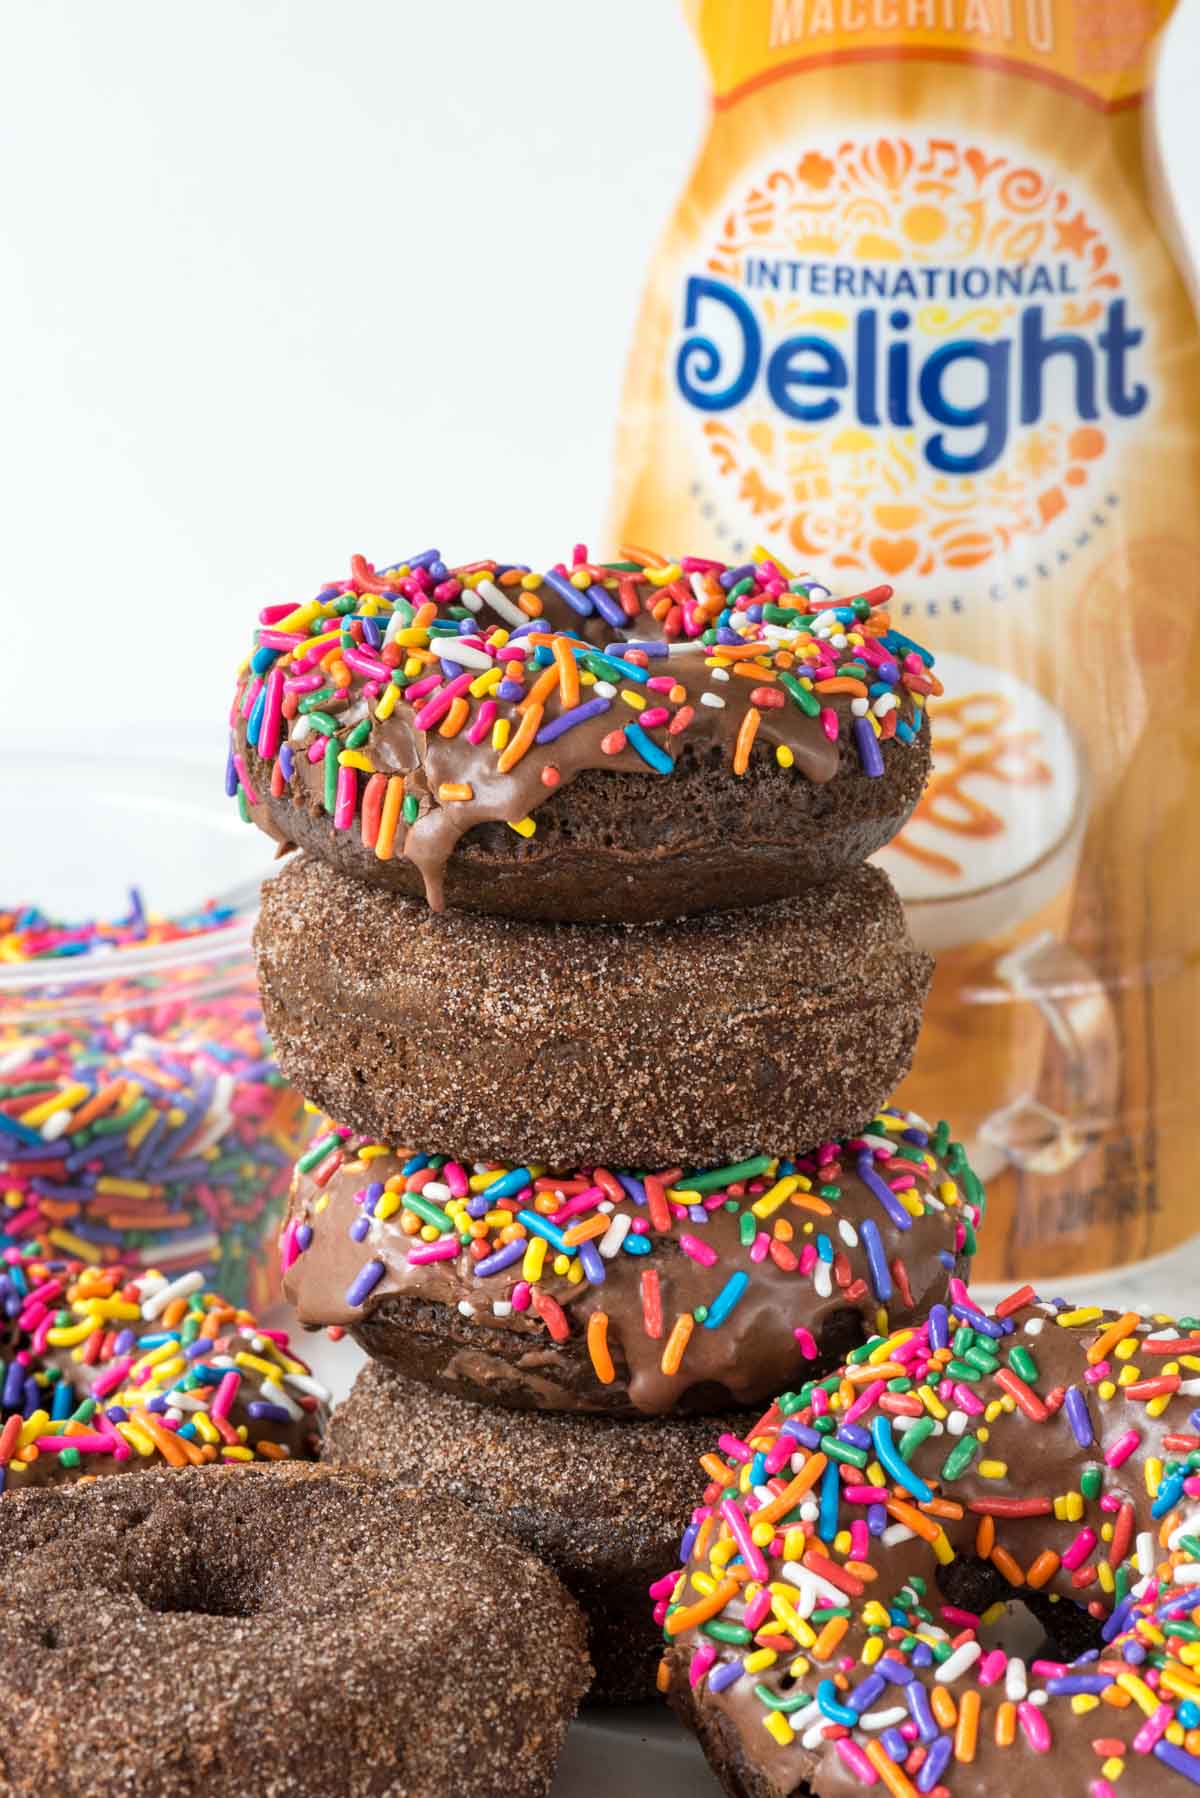 Baked Chocolate Donuts Recipe two ways: Glazed and Cinnamon Sugar Churro